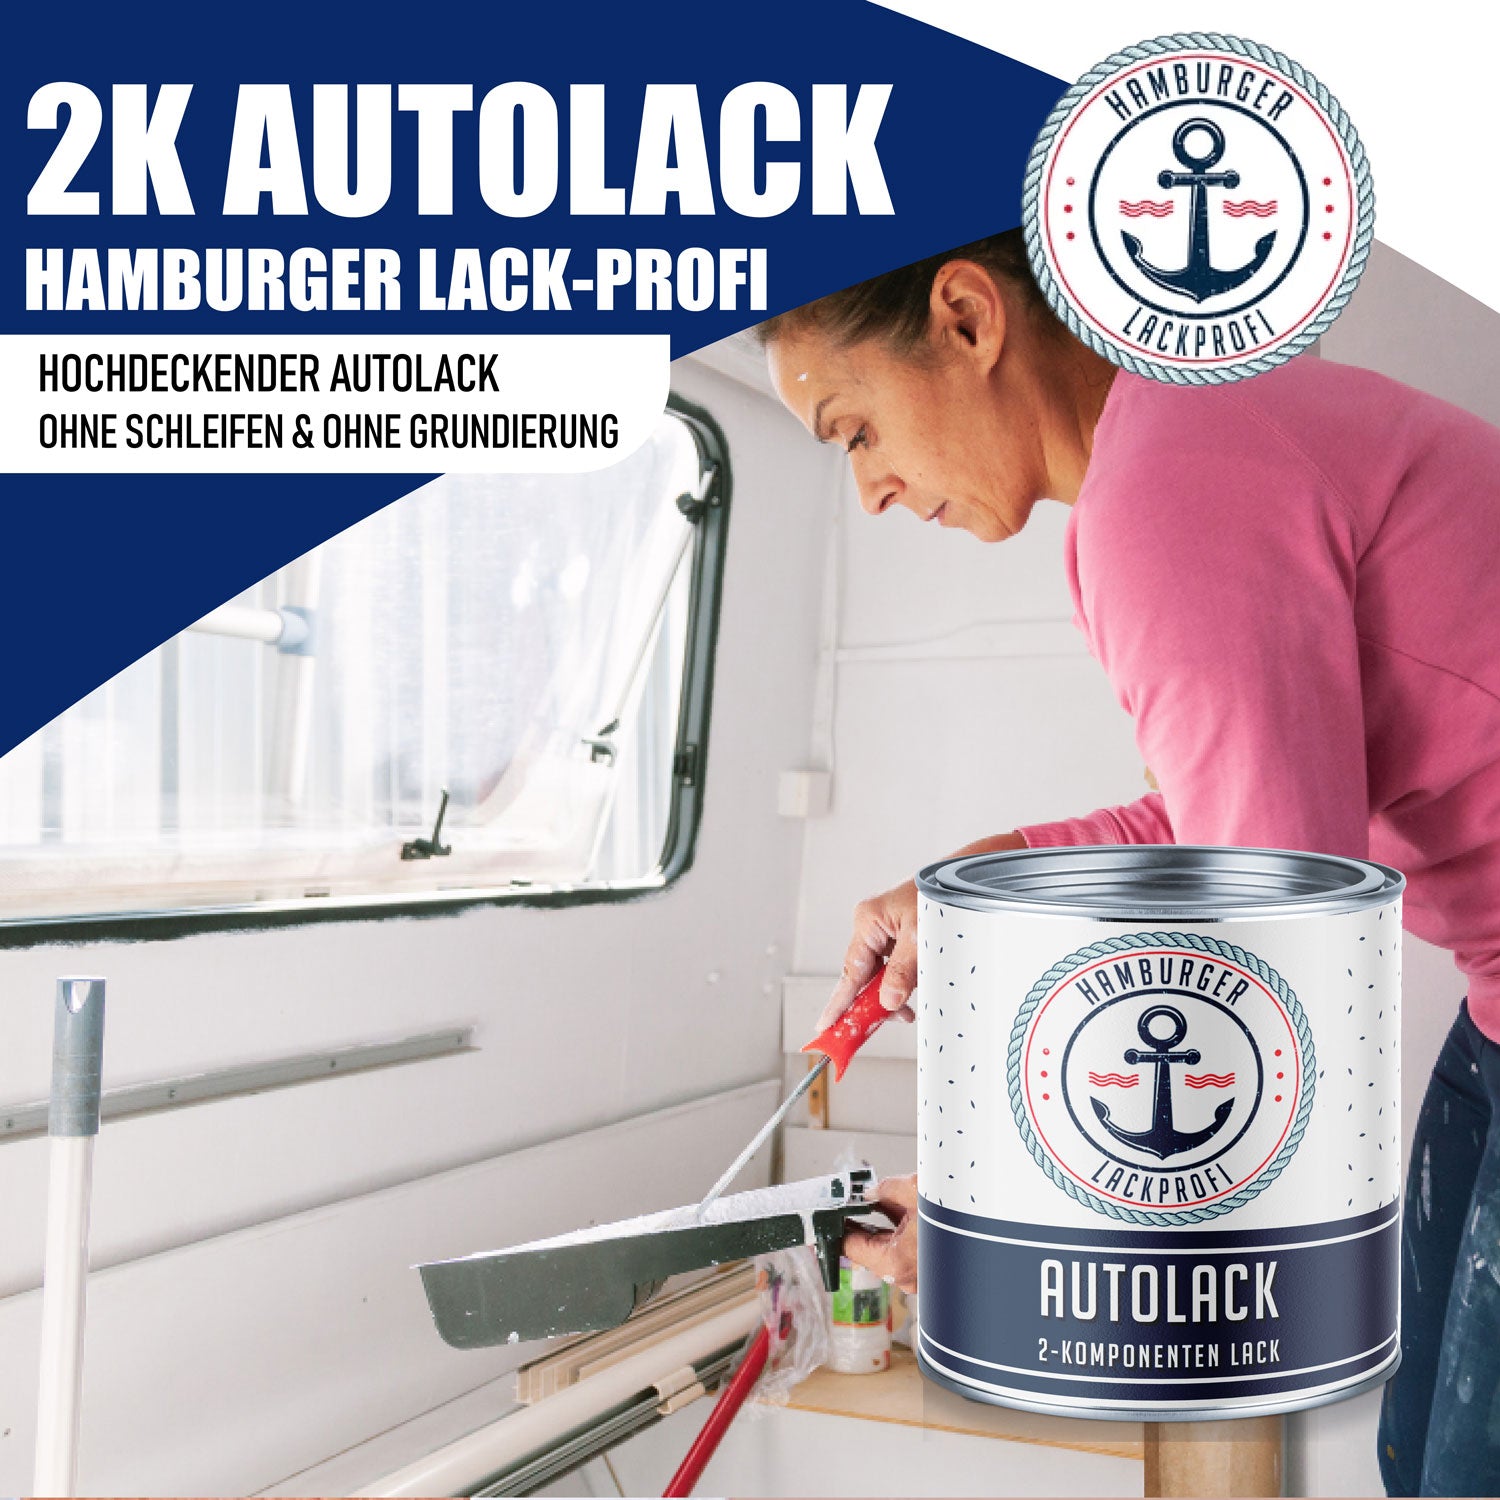 Hamburger Lack-Profi 2K Autolack in Rotviolett RAL 4002 mit Lackierset (X300) & Verdünnung (1 L) - 30% Sparangebot